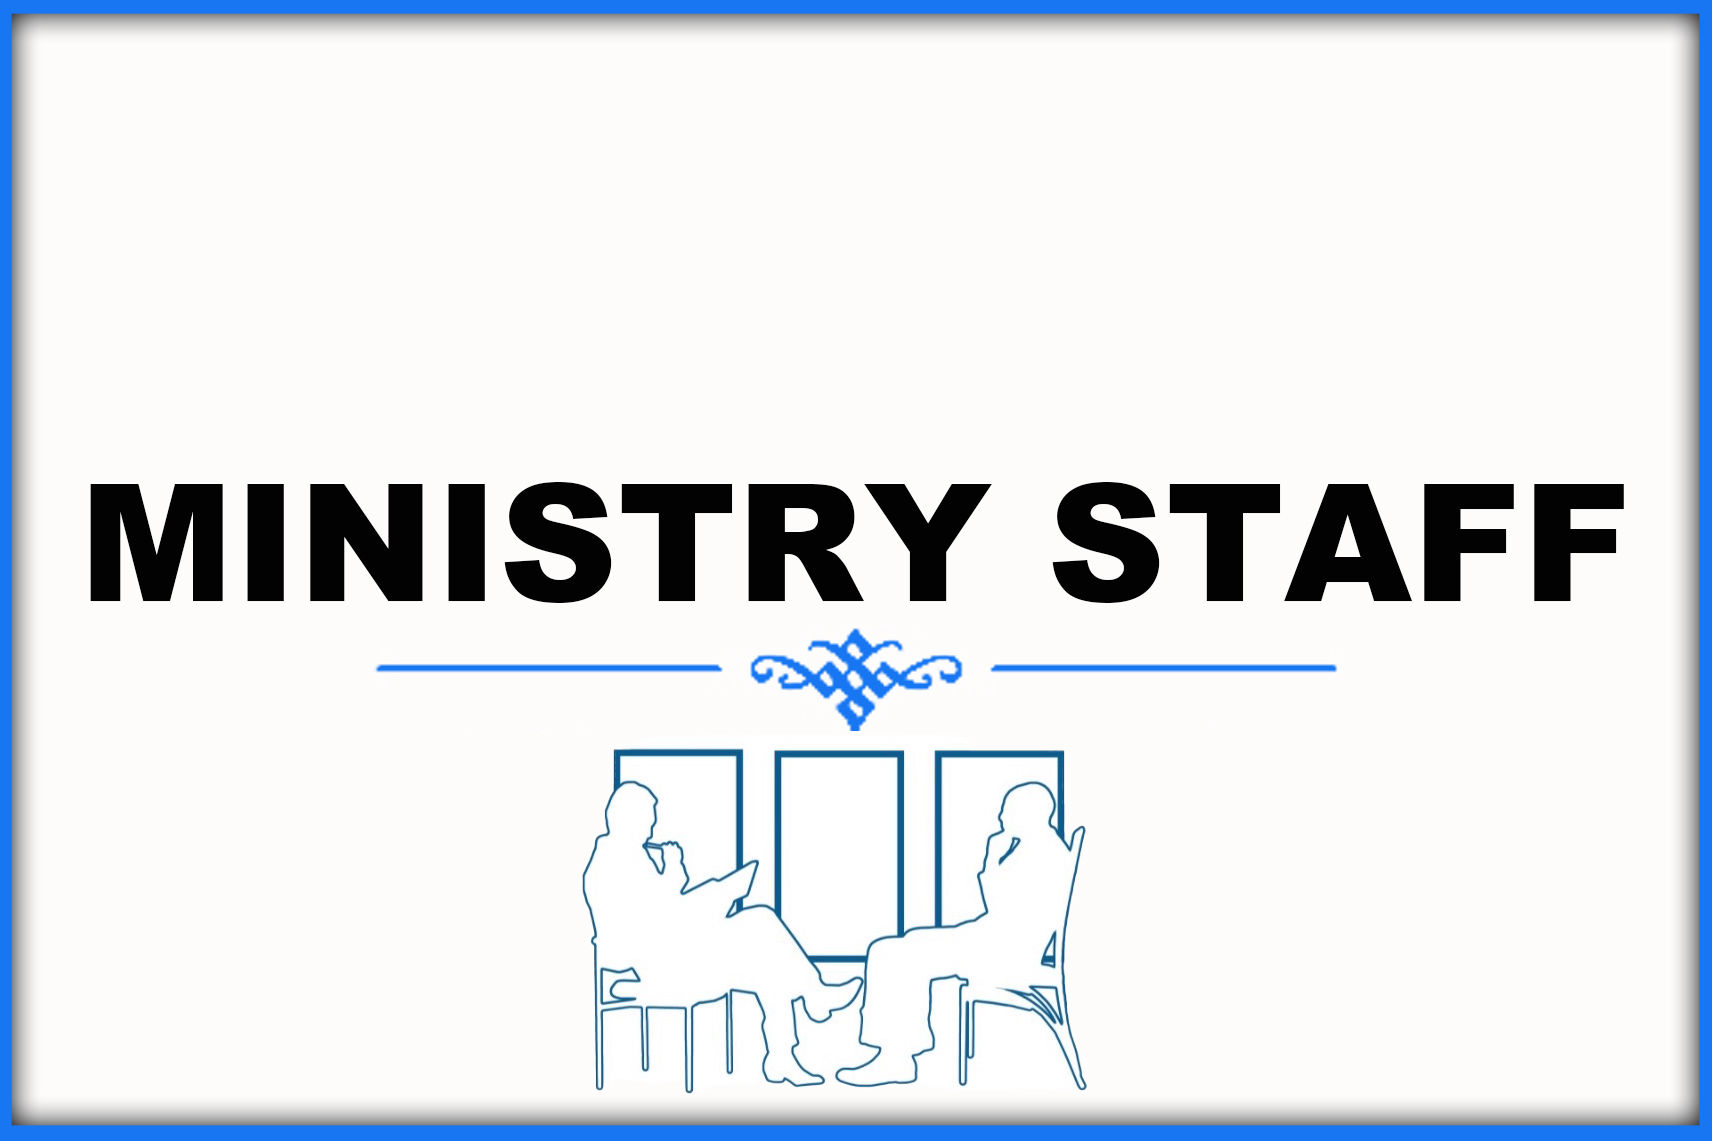 MINISTRY STAFF